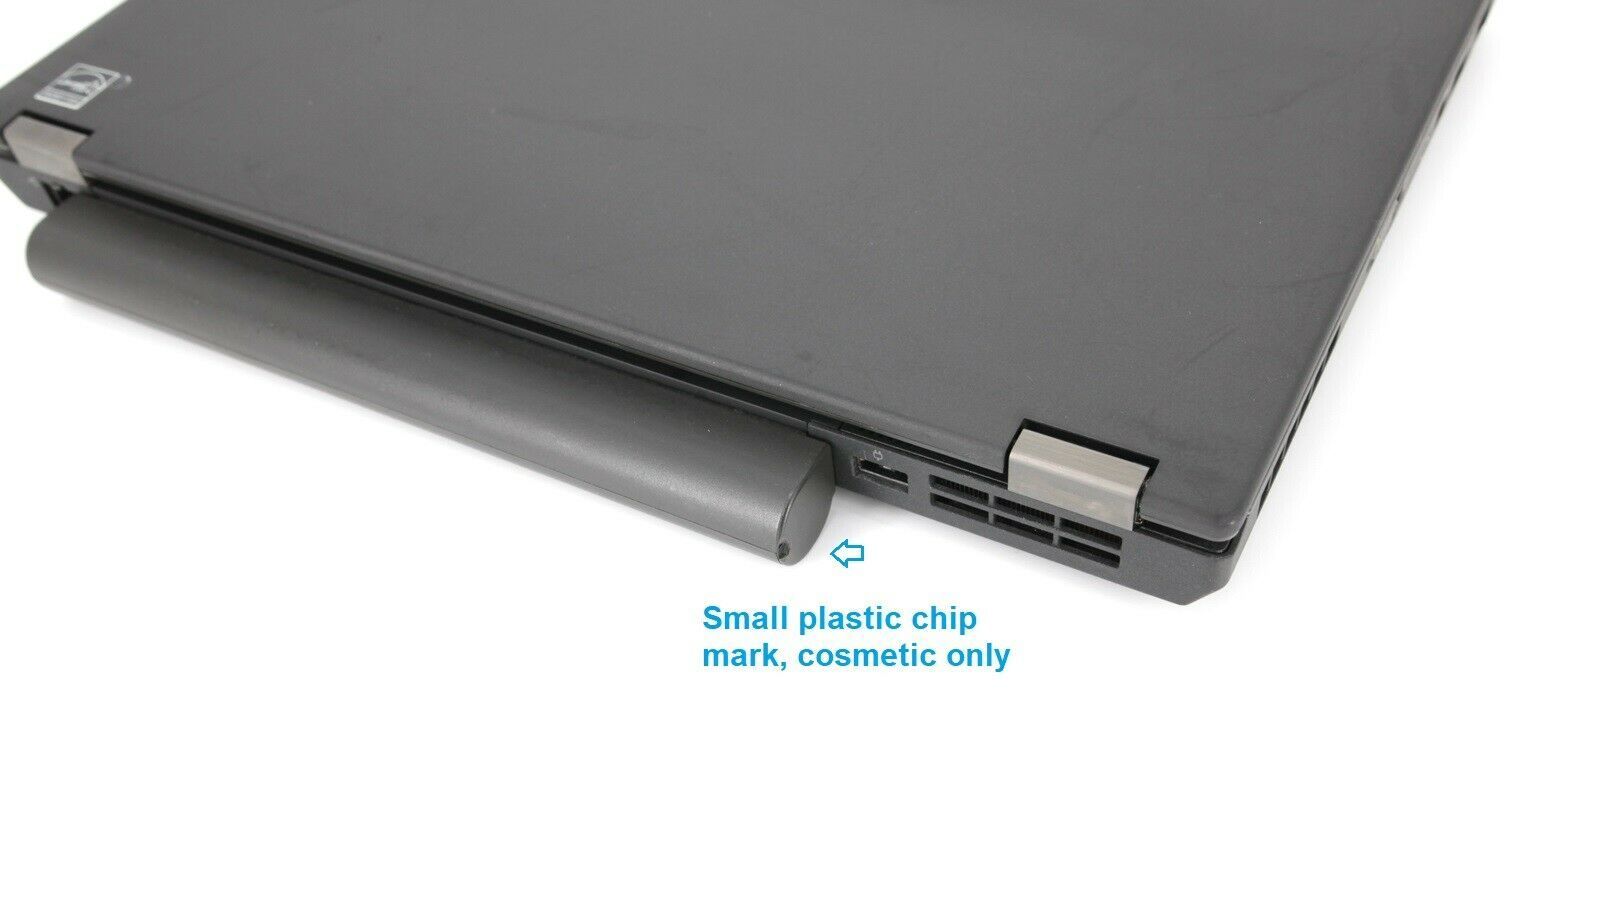 Lenovo ThinkPad T440P Laptop: 480GB SSD 4th Gen i7 12GB RAM, NVIDIA 730M VAT - CruiseTech